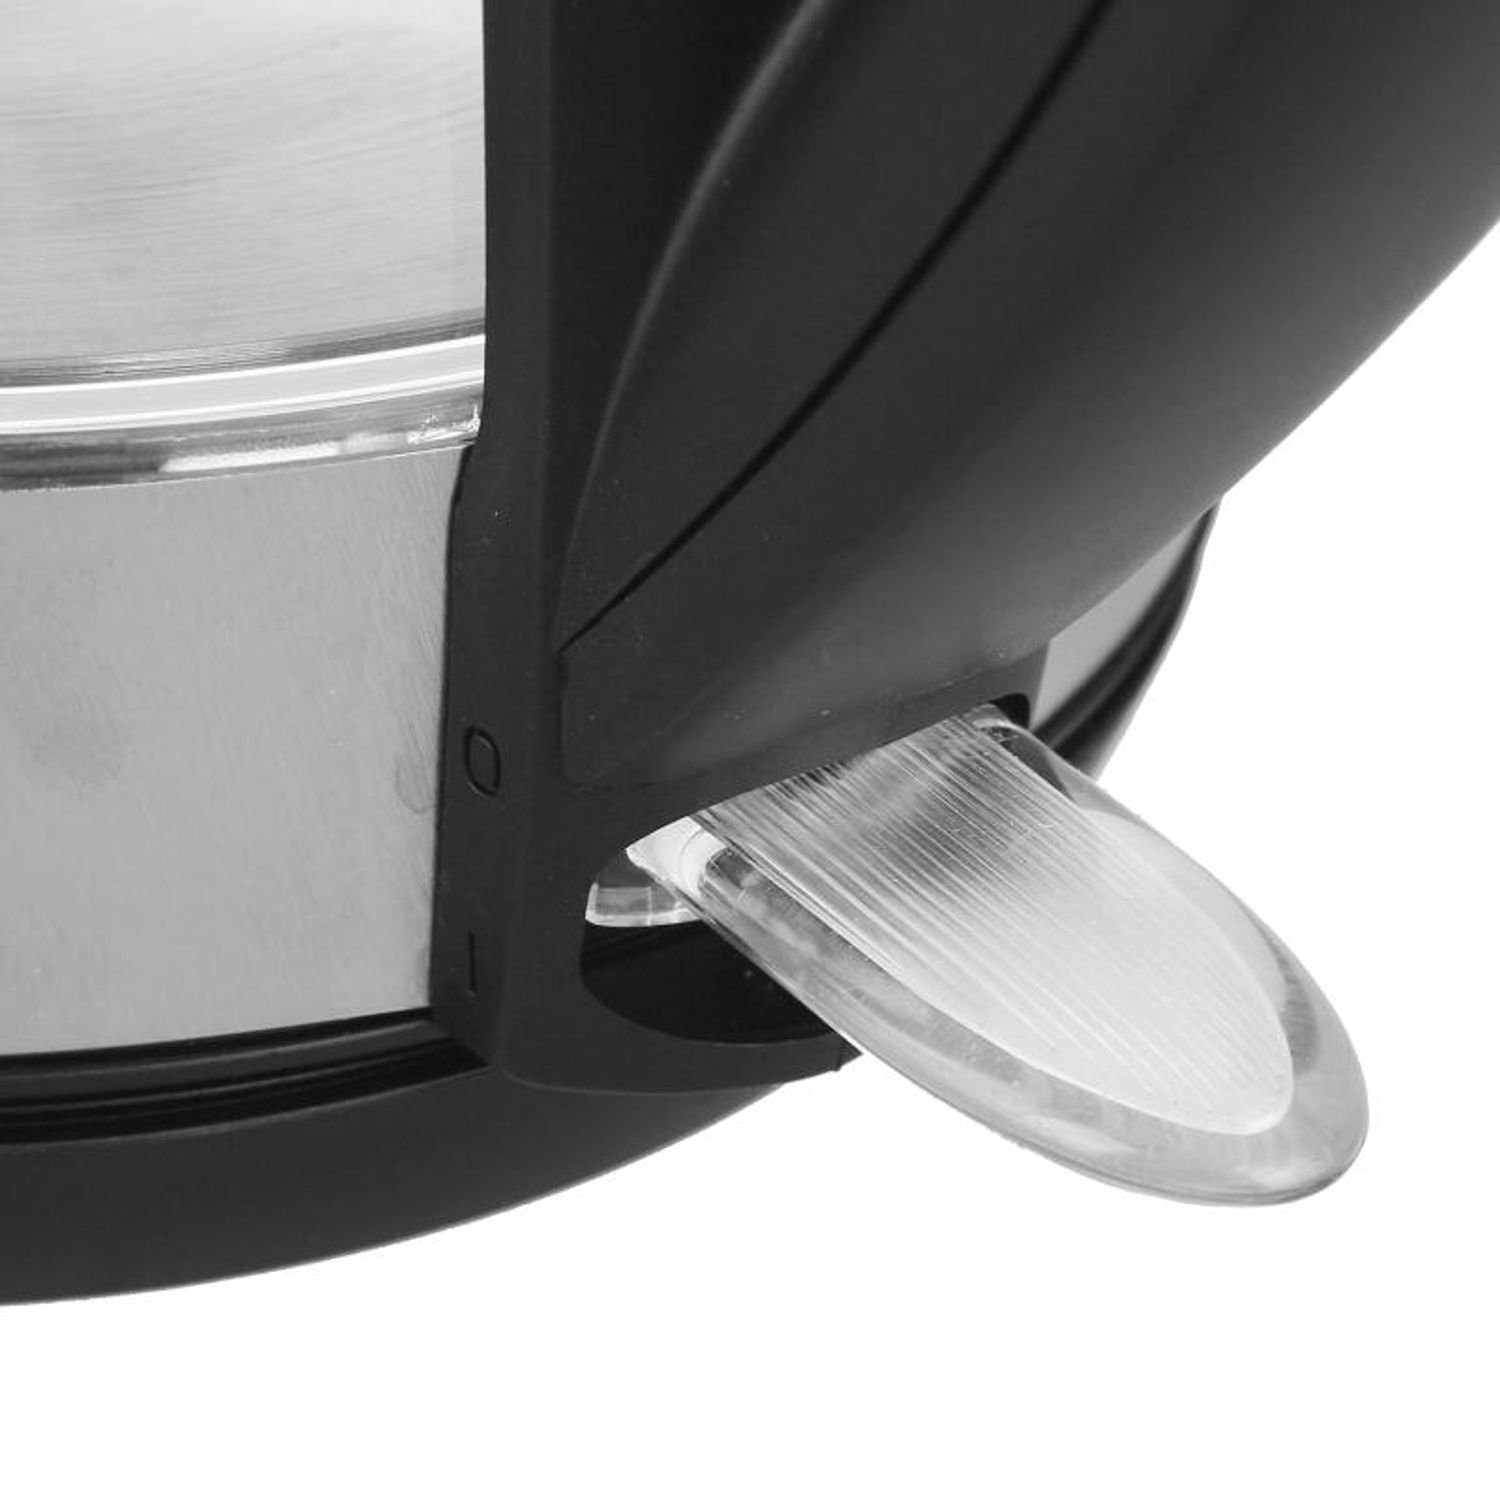 Emerio Wasserkocher Glas Wasserkocher 1,7L Tee Erwärmen Kü Beleuchtung LED Kabellos Kettle